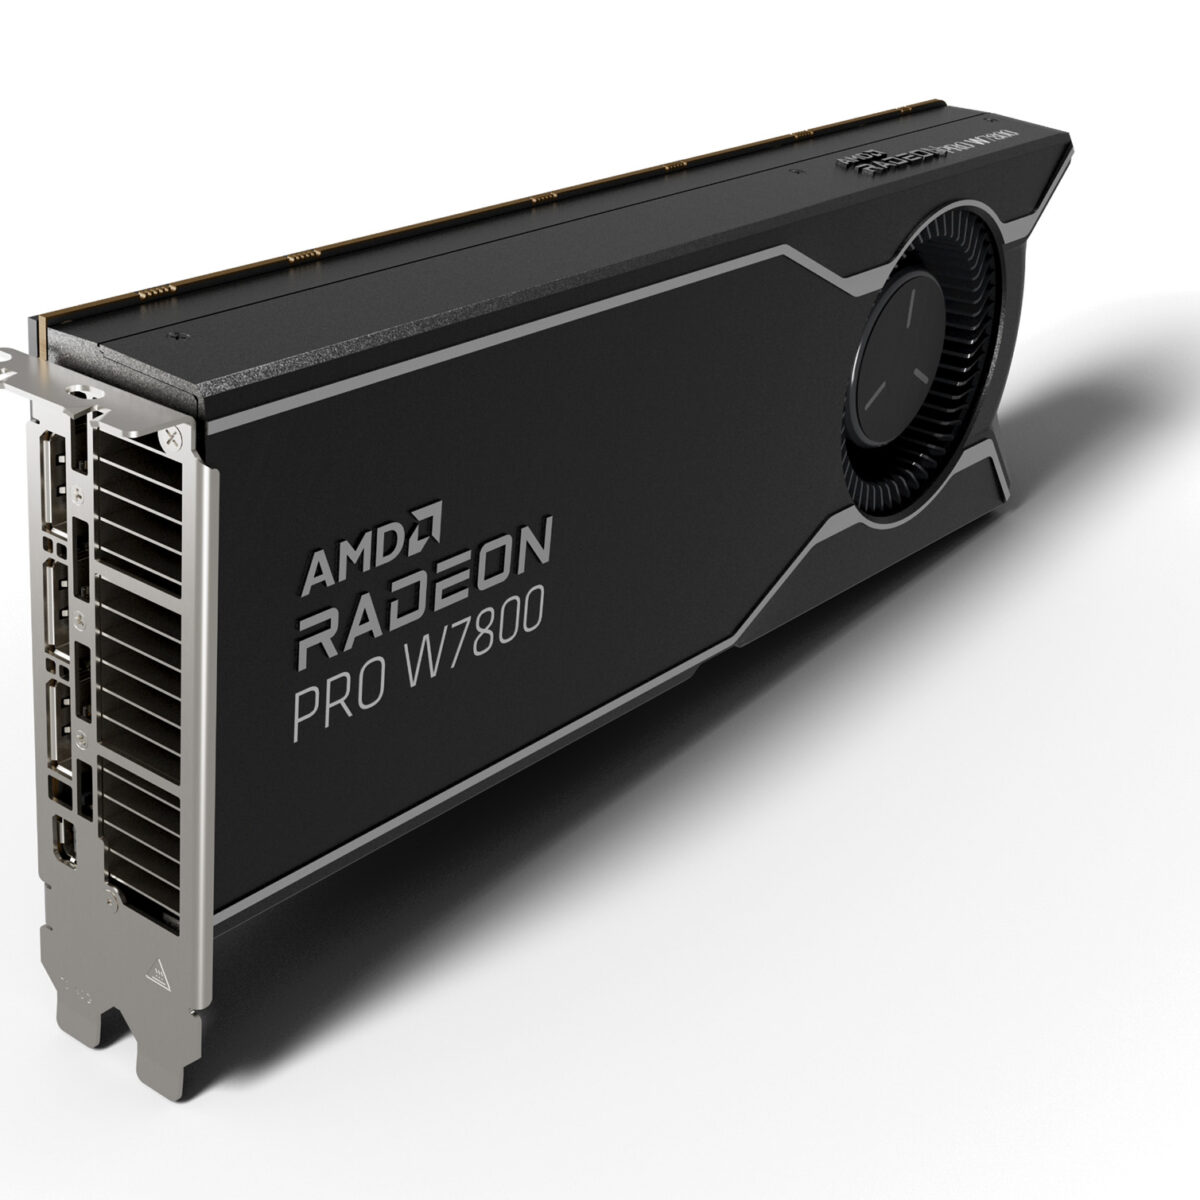 AMD Radeon PRO W7800 Perspective Shot